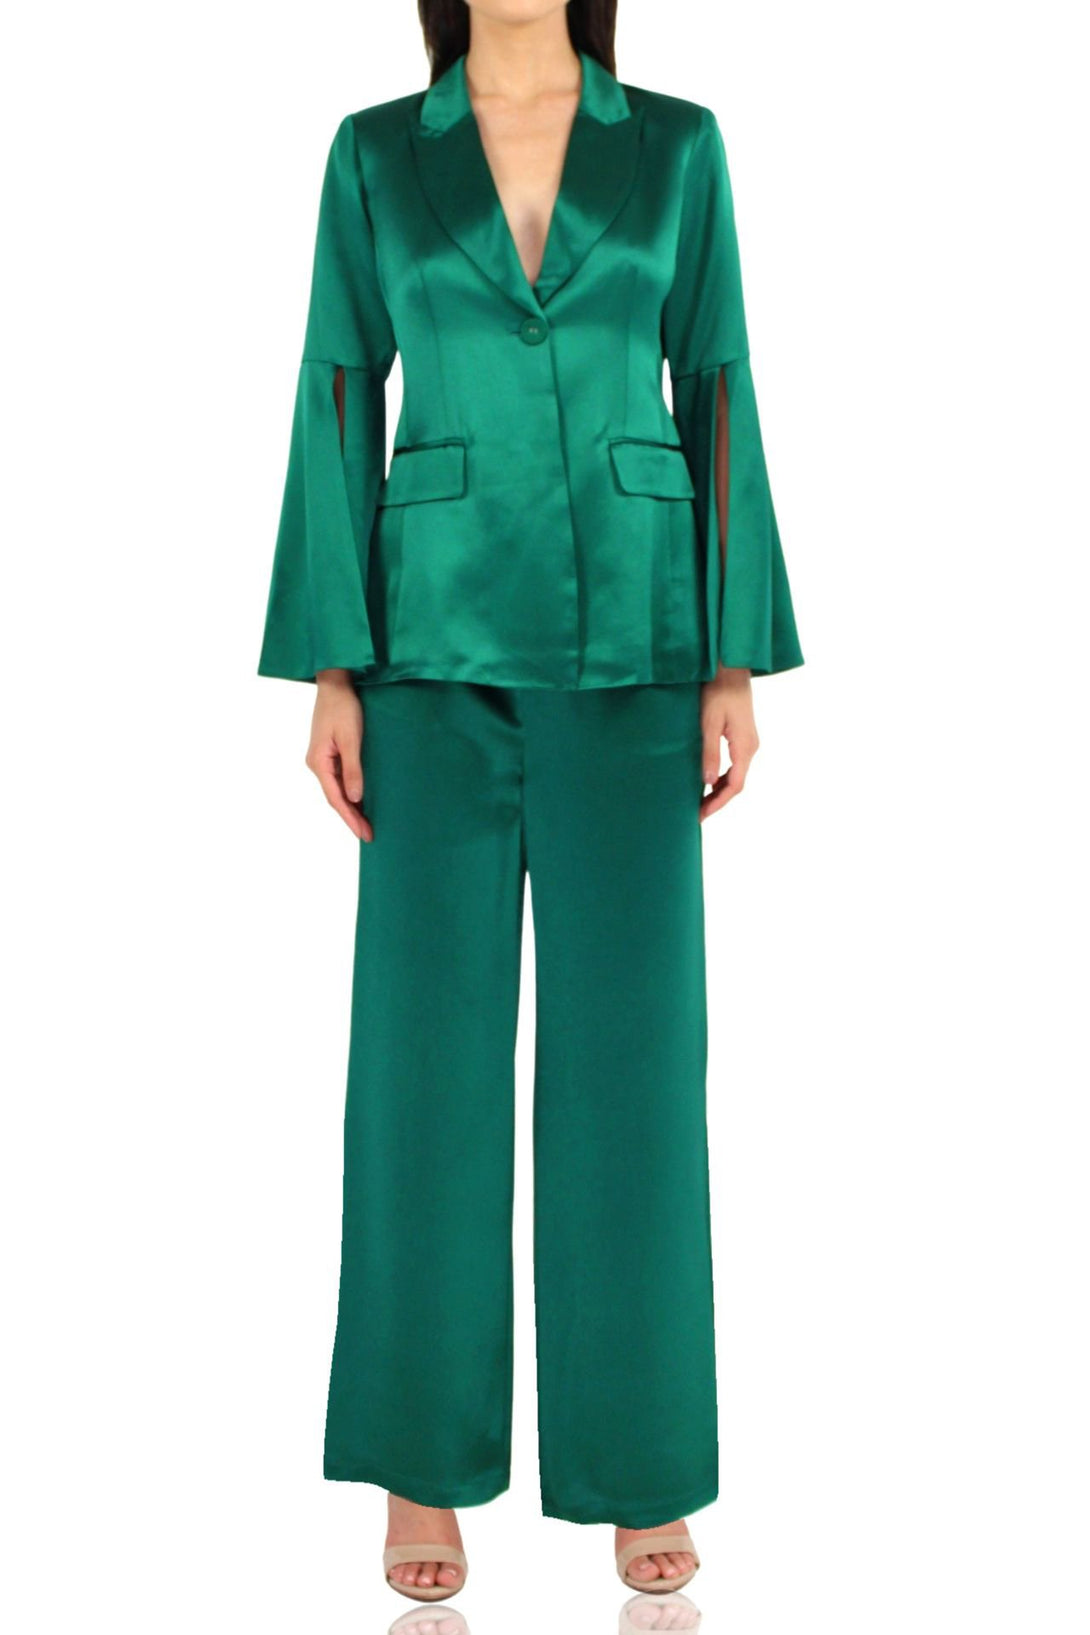 Women-Designer-Green-Suit-By-Kyle-Richard